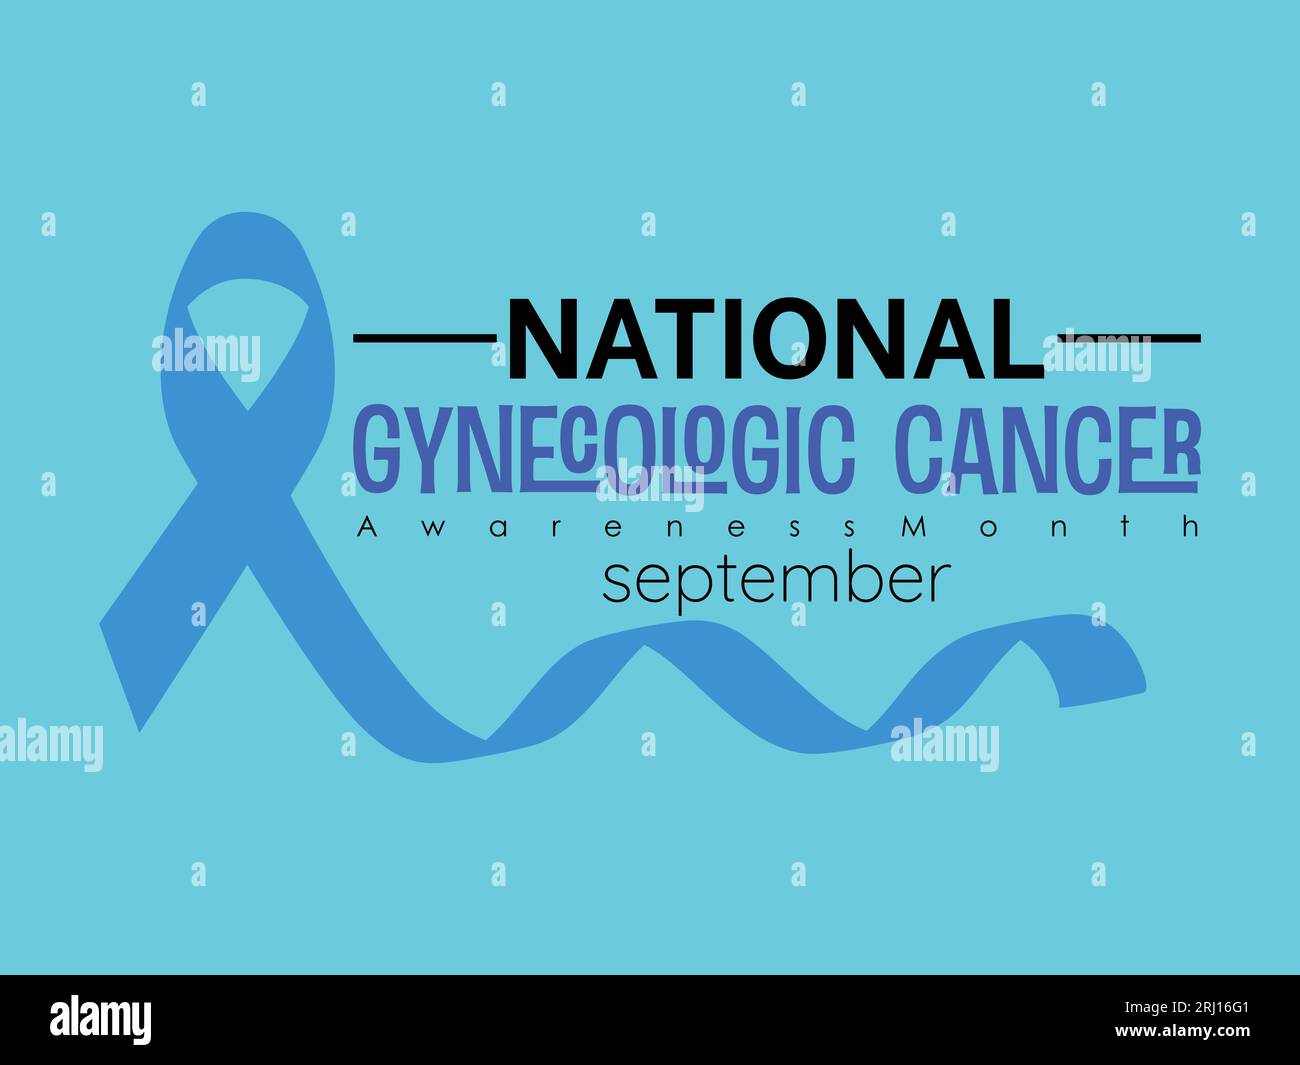 GYNECOLOGIC CANCER AWARENESS MONTH